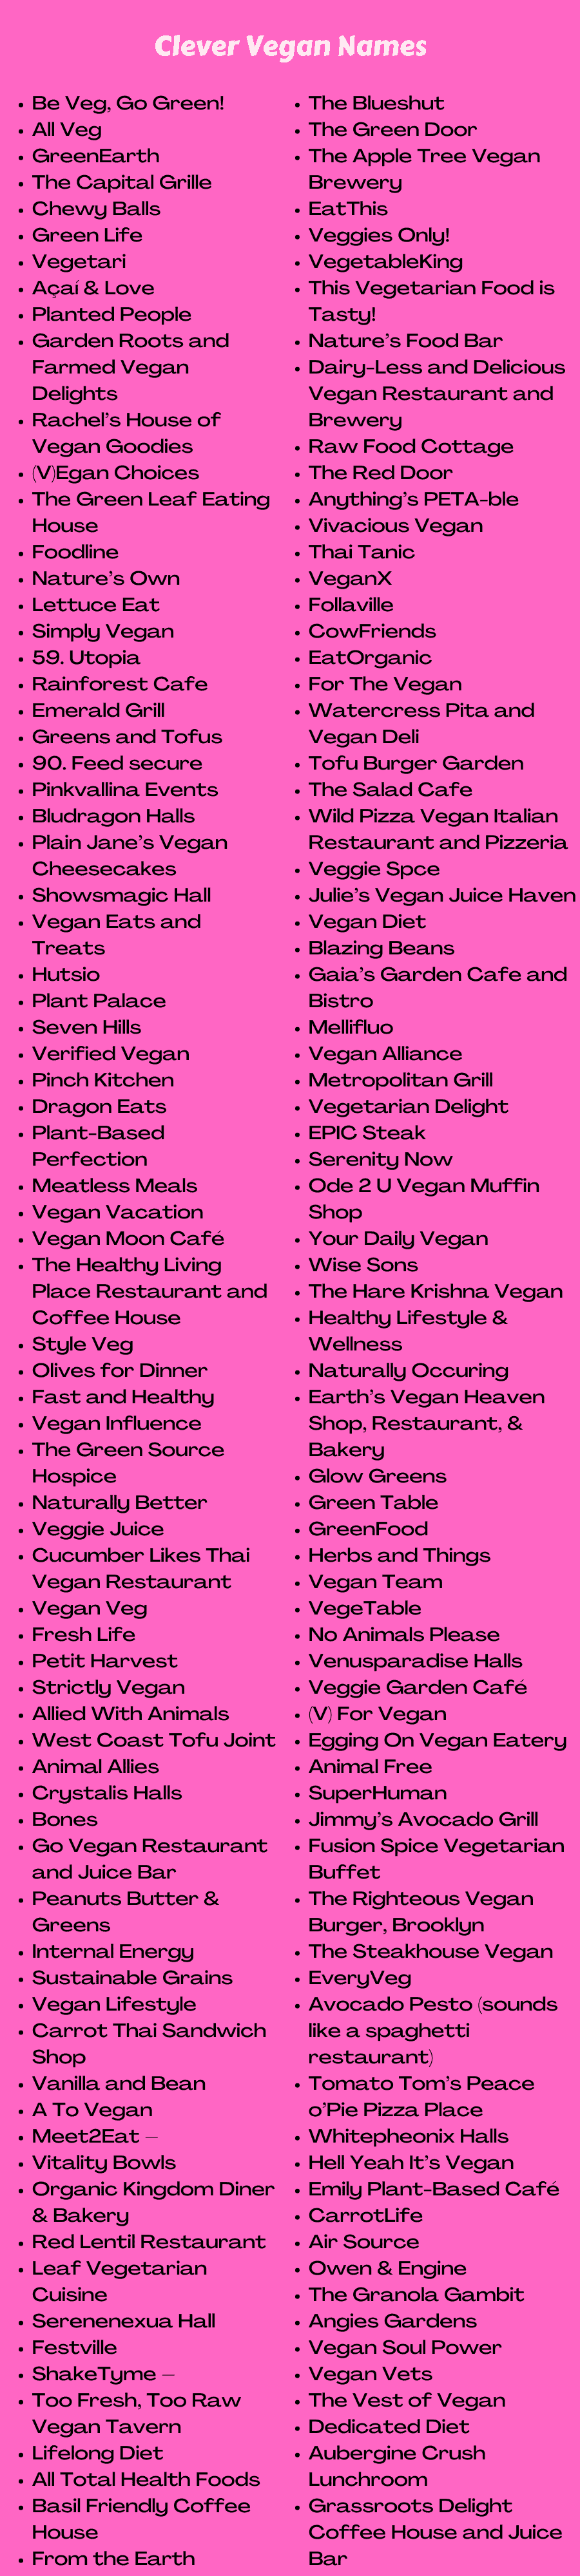 Clever Vegan Names: 400+ Vegan Food Names For Instagram